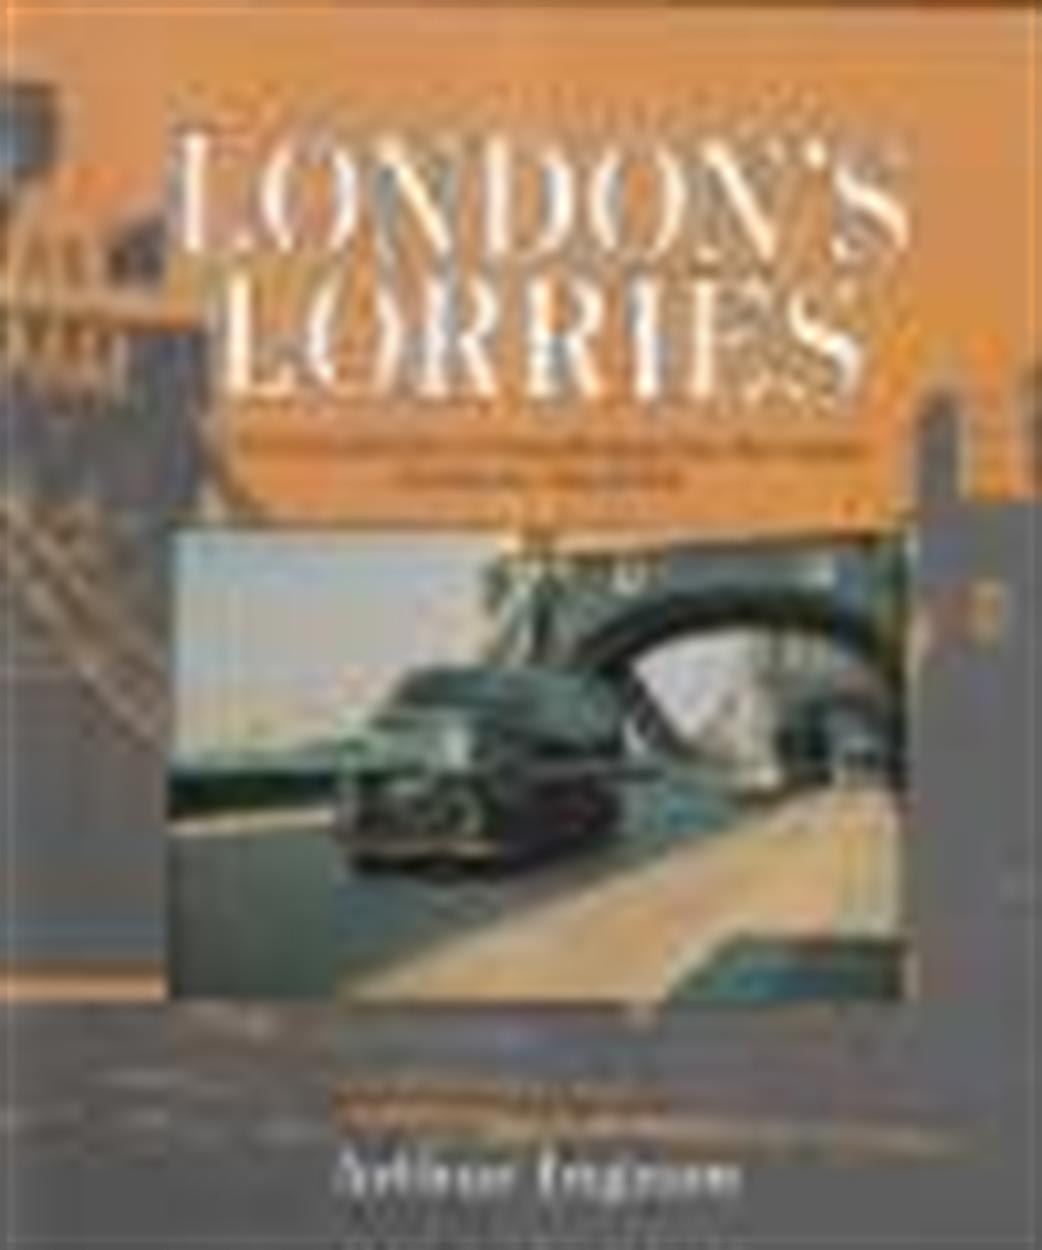 9781871565065 London's Lorries Book By Arthur Ingram